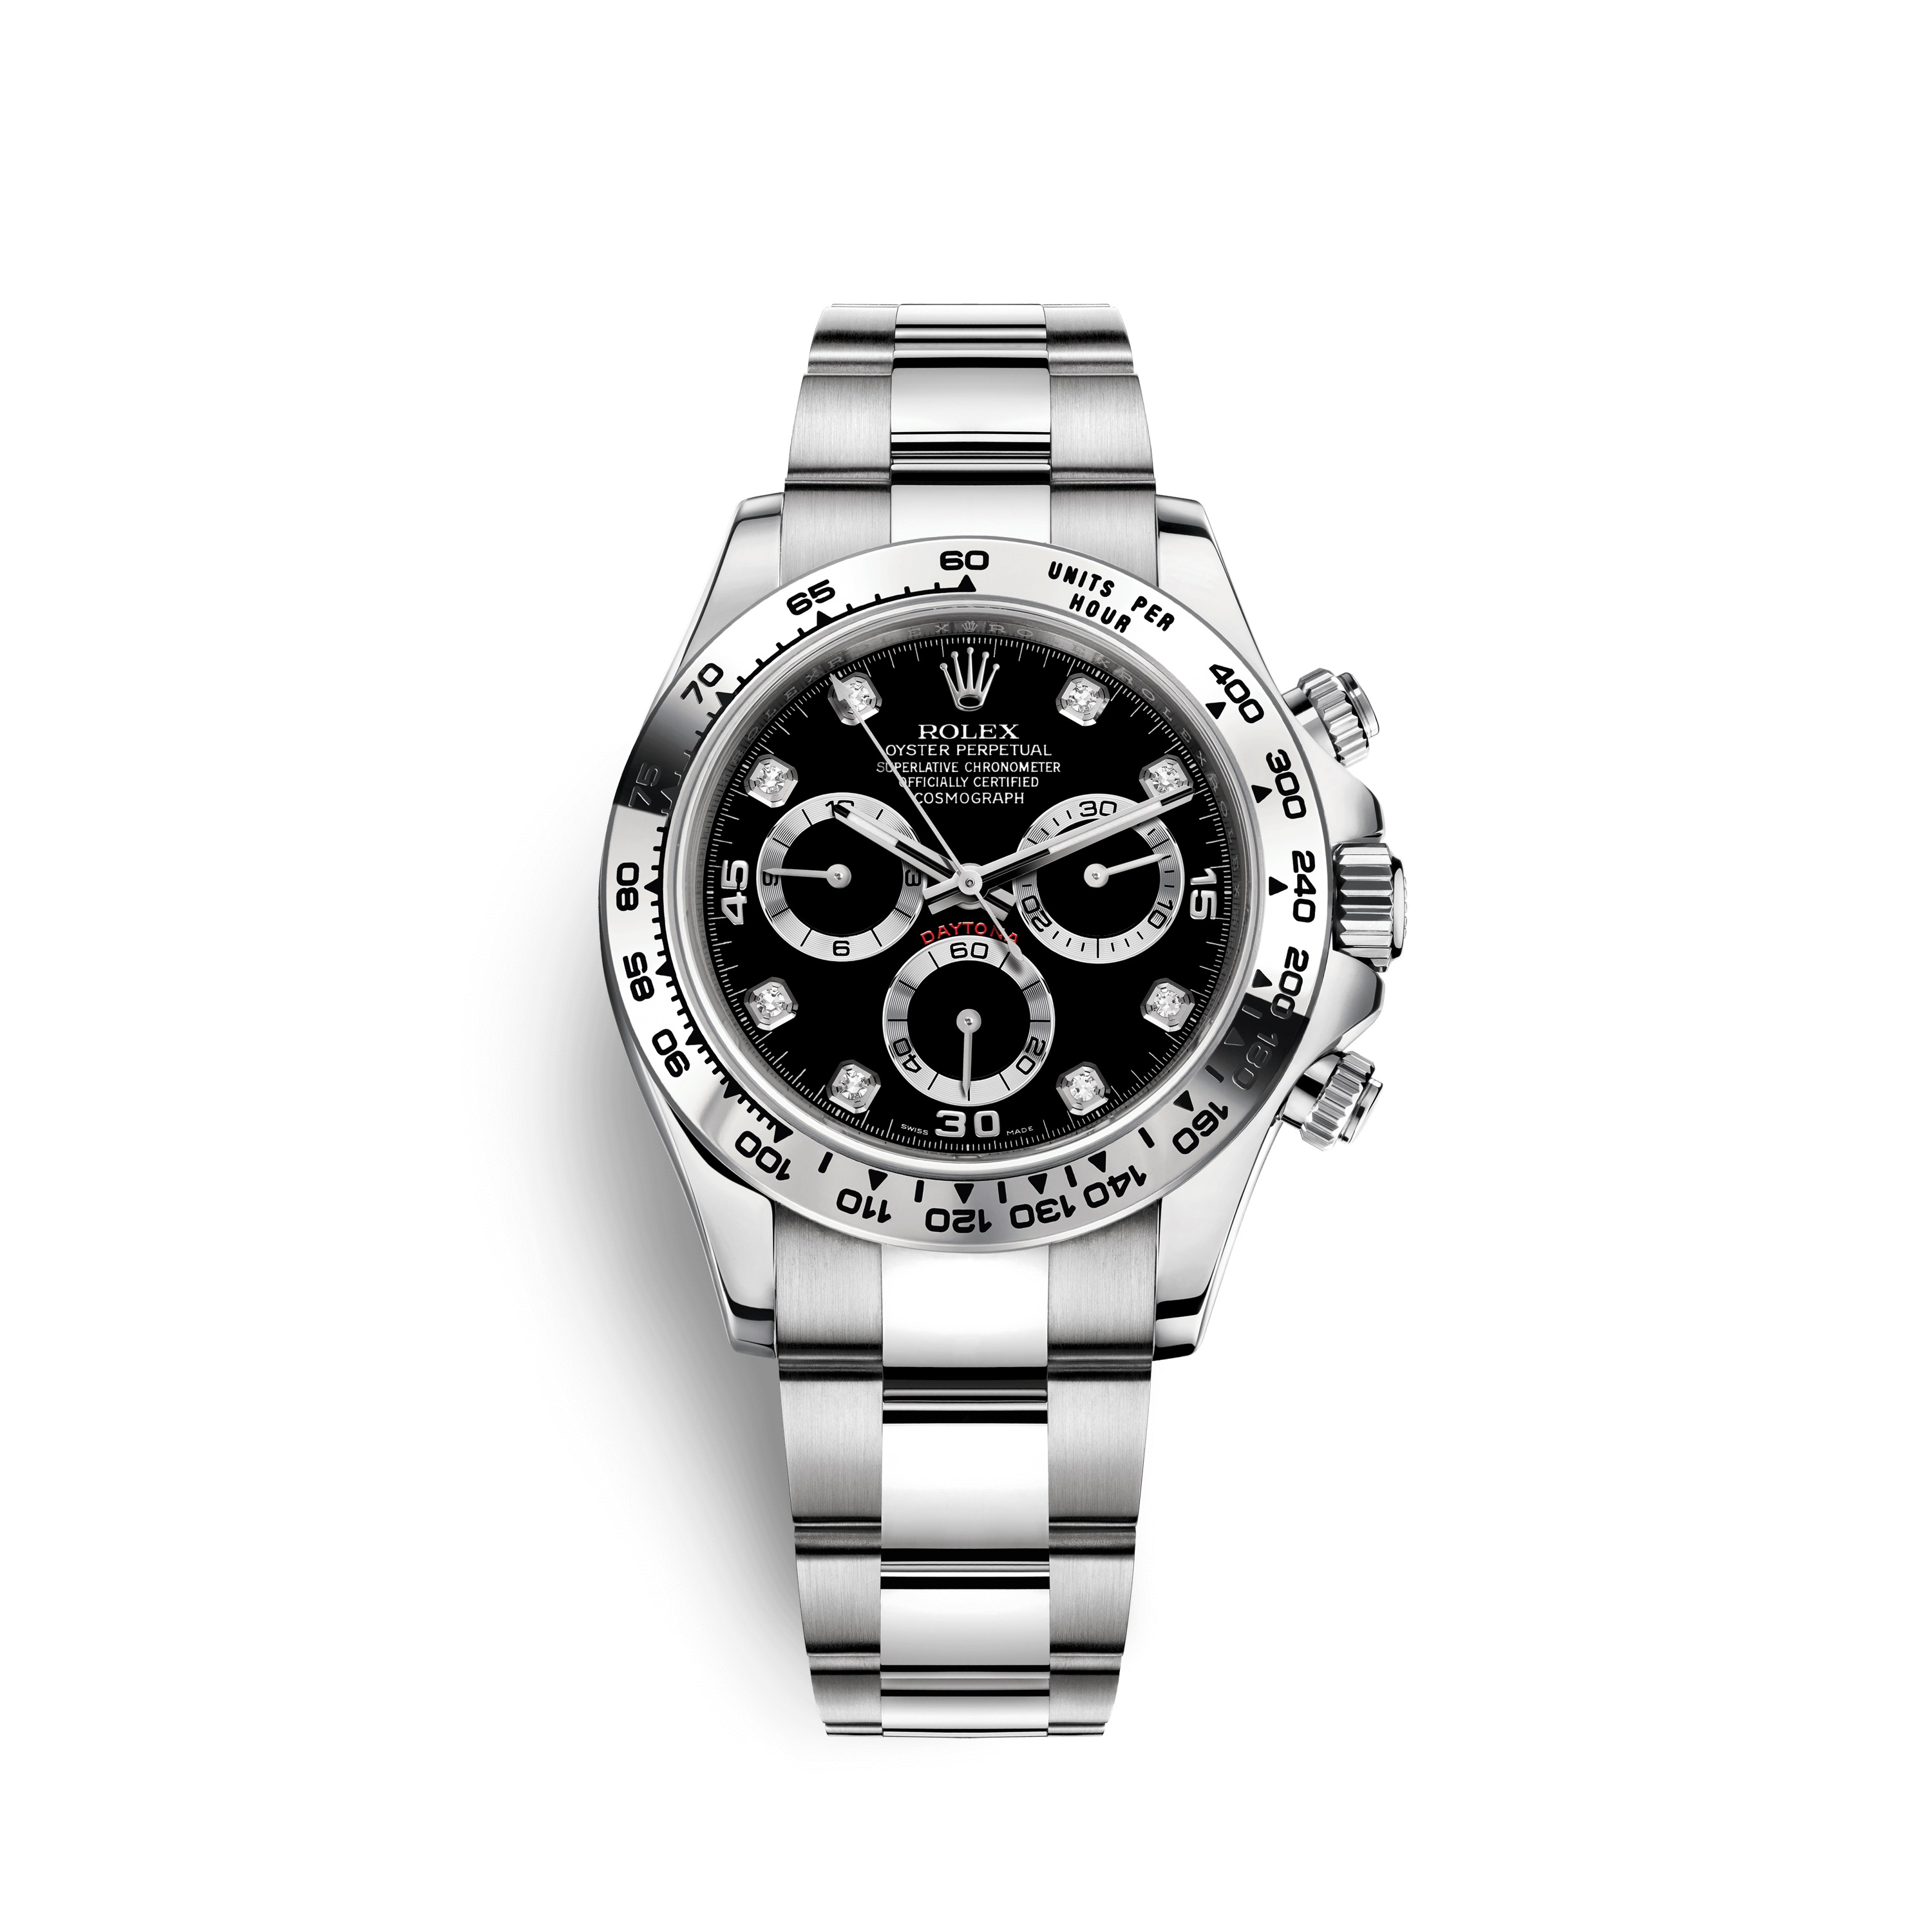 Cosmograph Daytona 116509 White Gold Watch (Black Set with Diamonds)